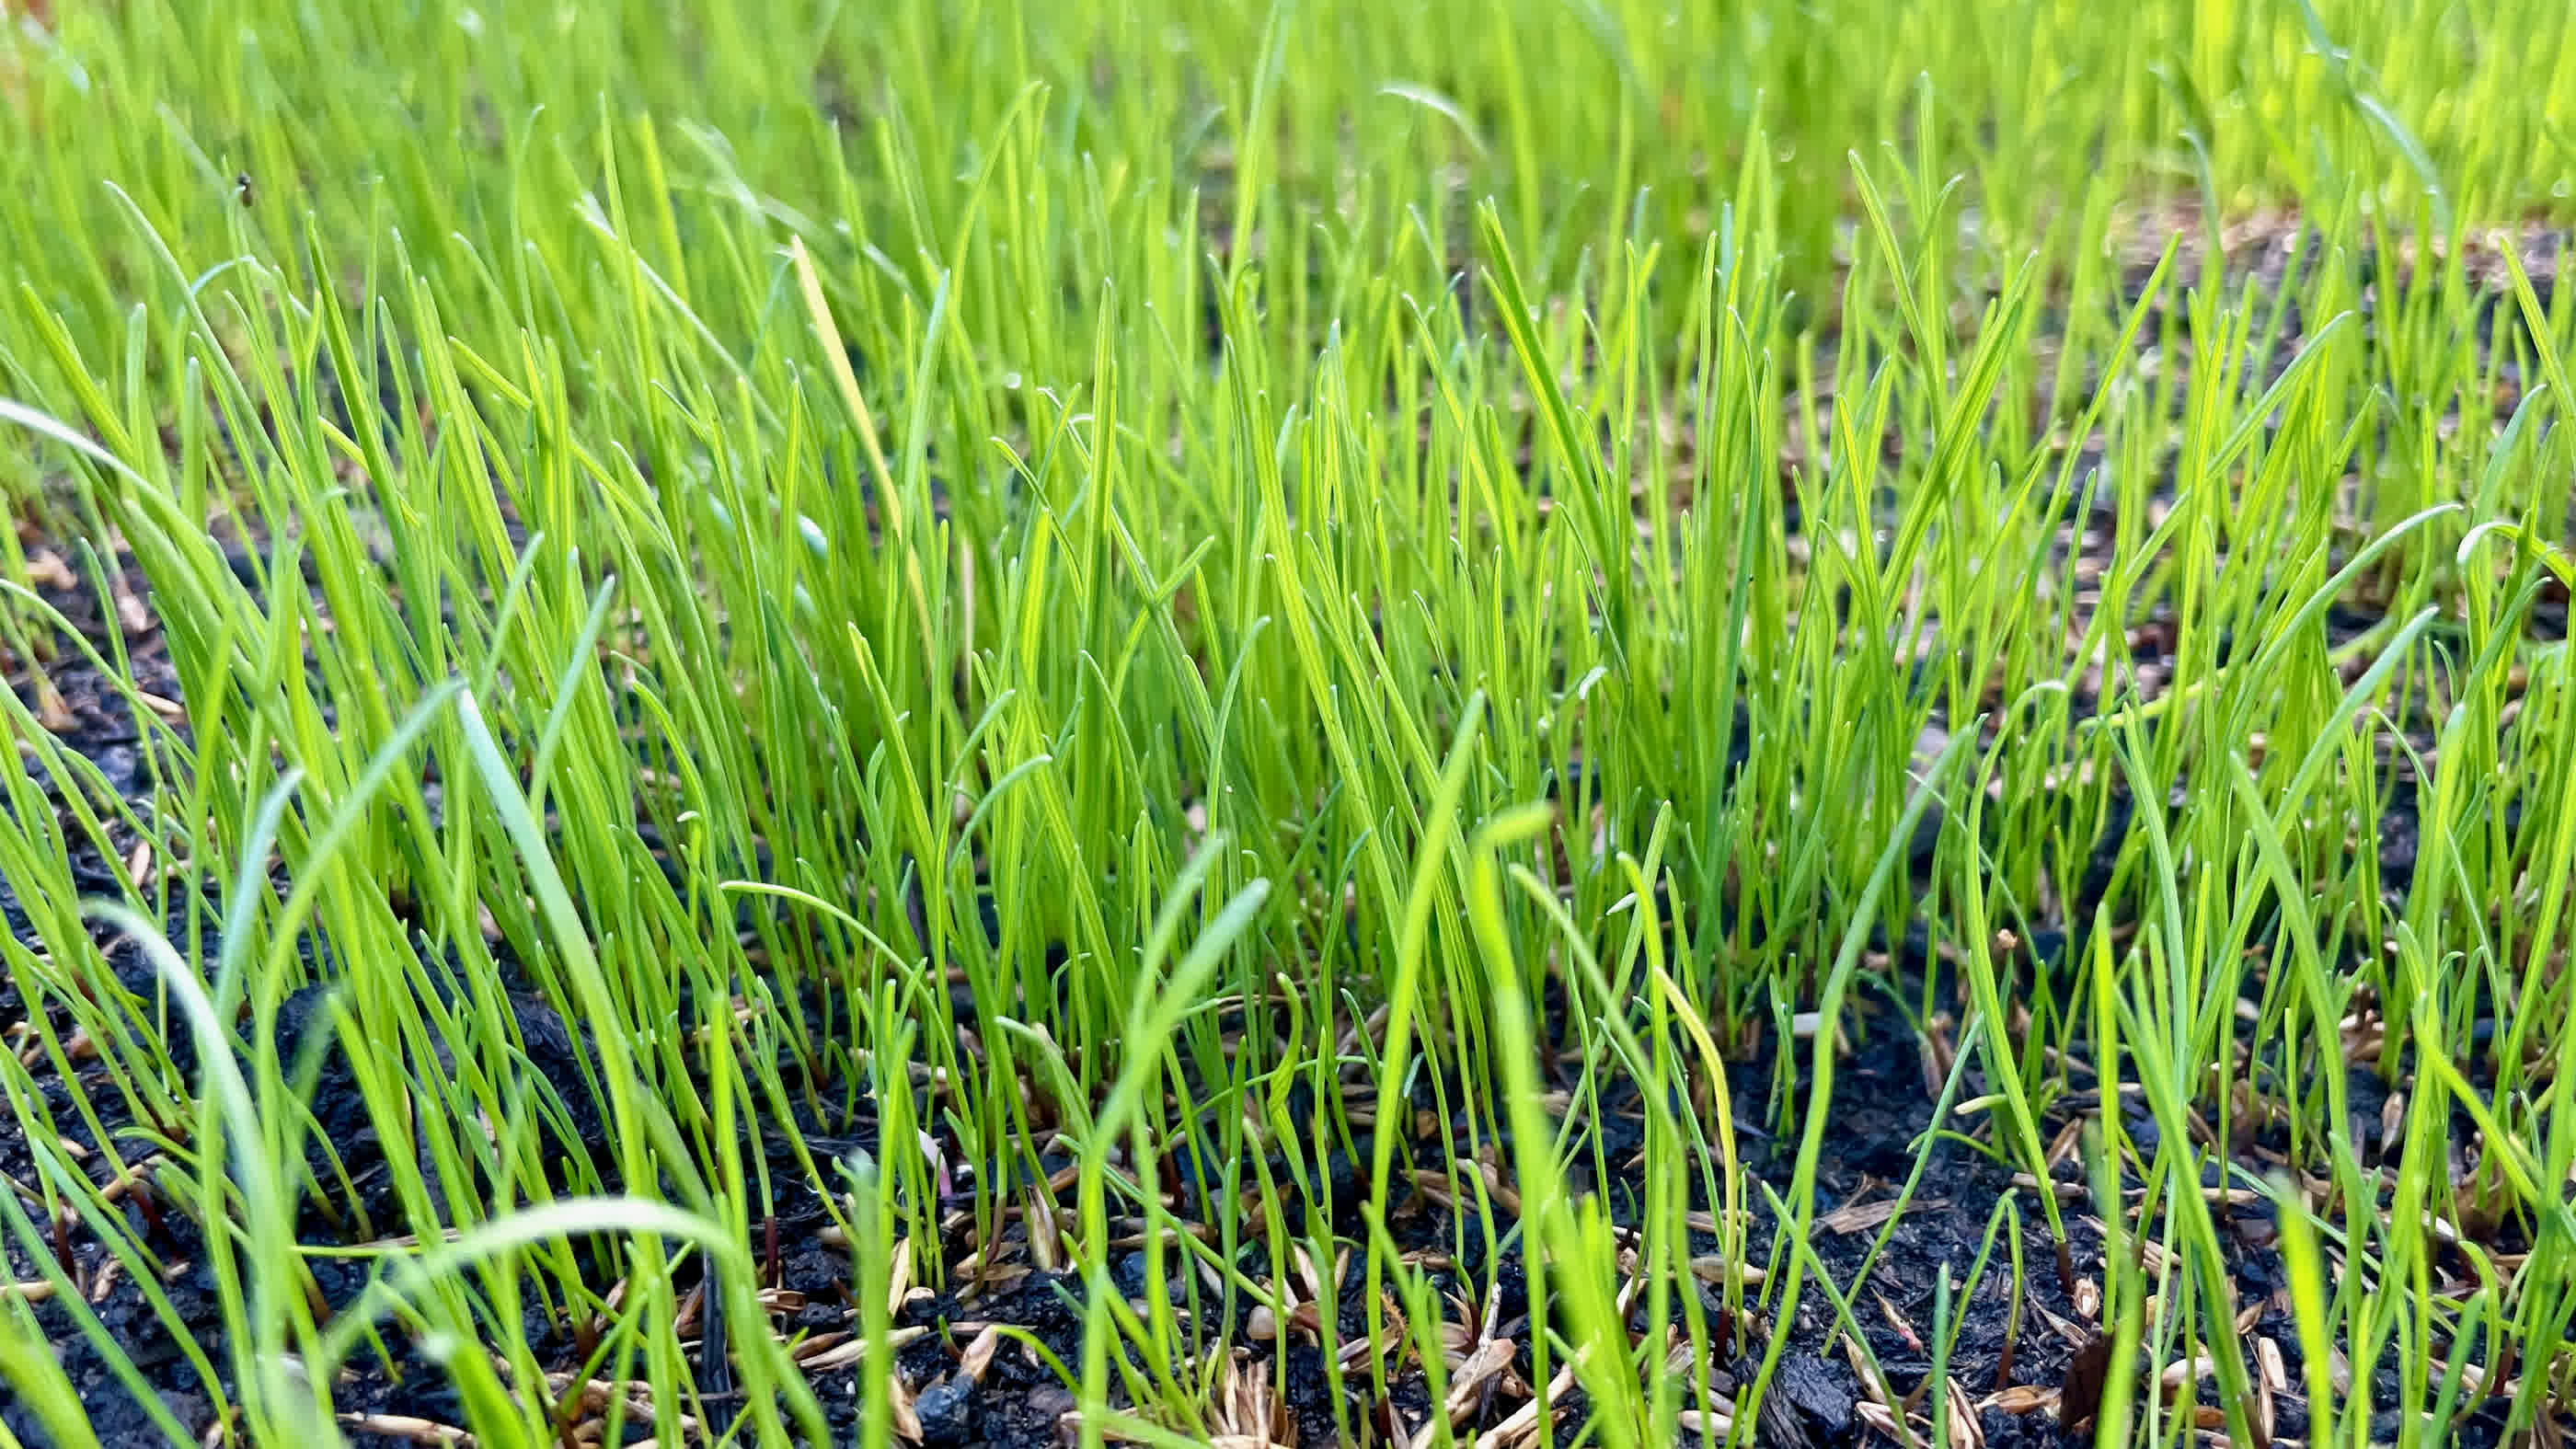 Newly germinated grass